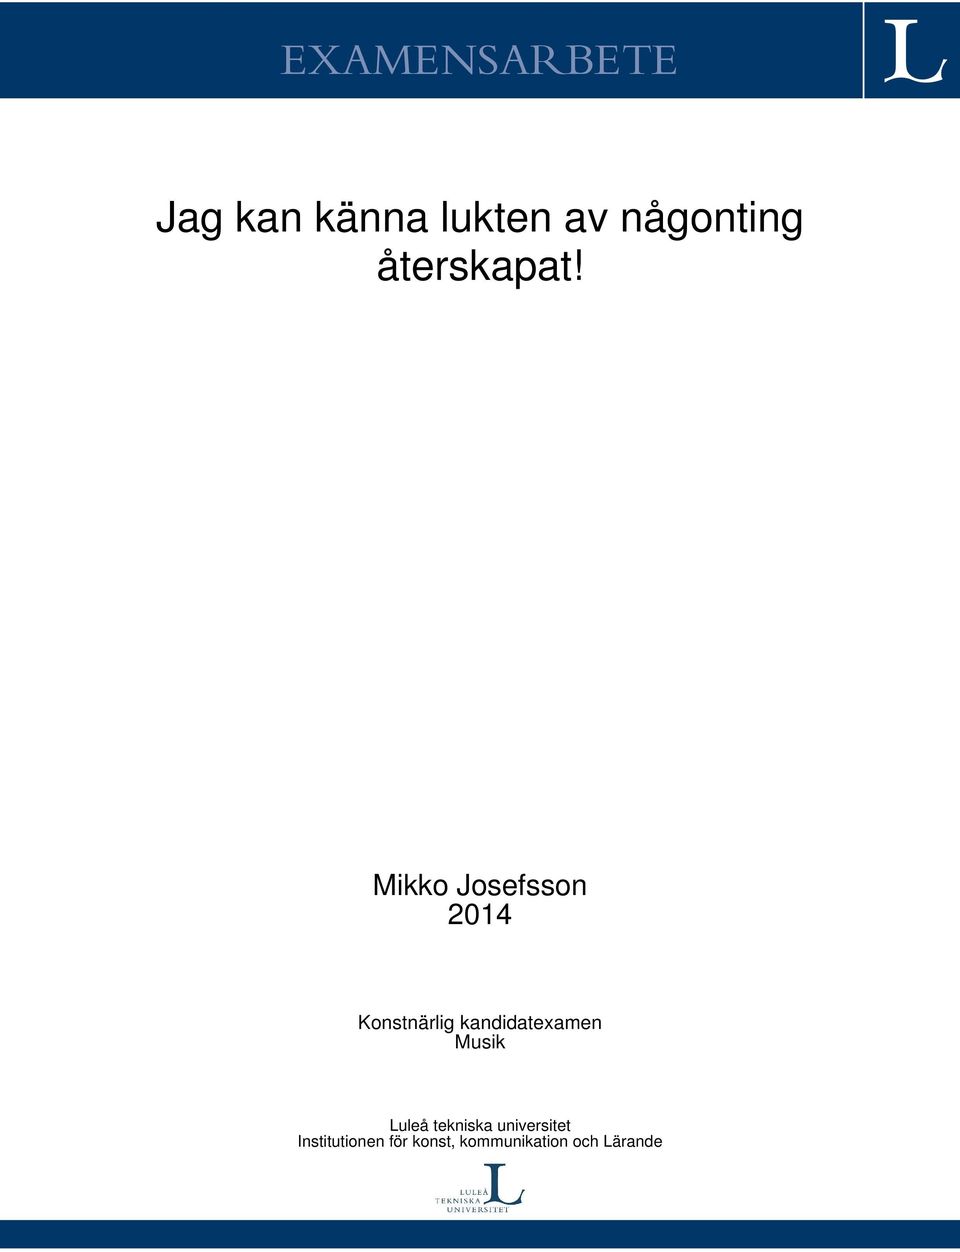 Mikko Josefsson 2014 Konstnärlig kandidatexamen